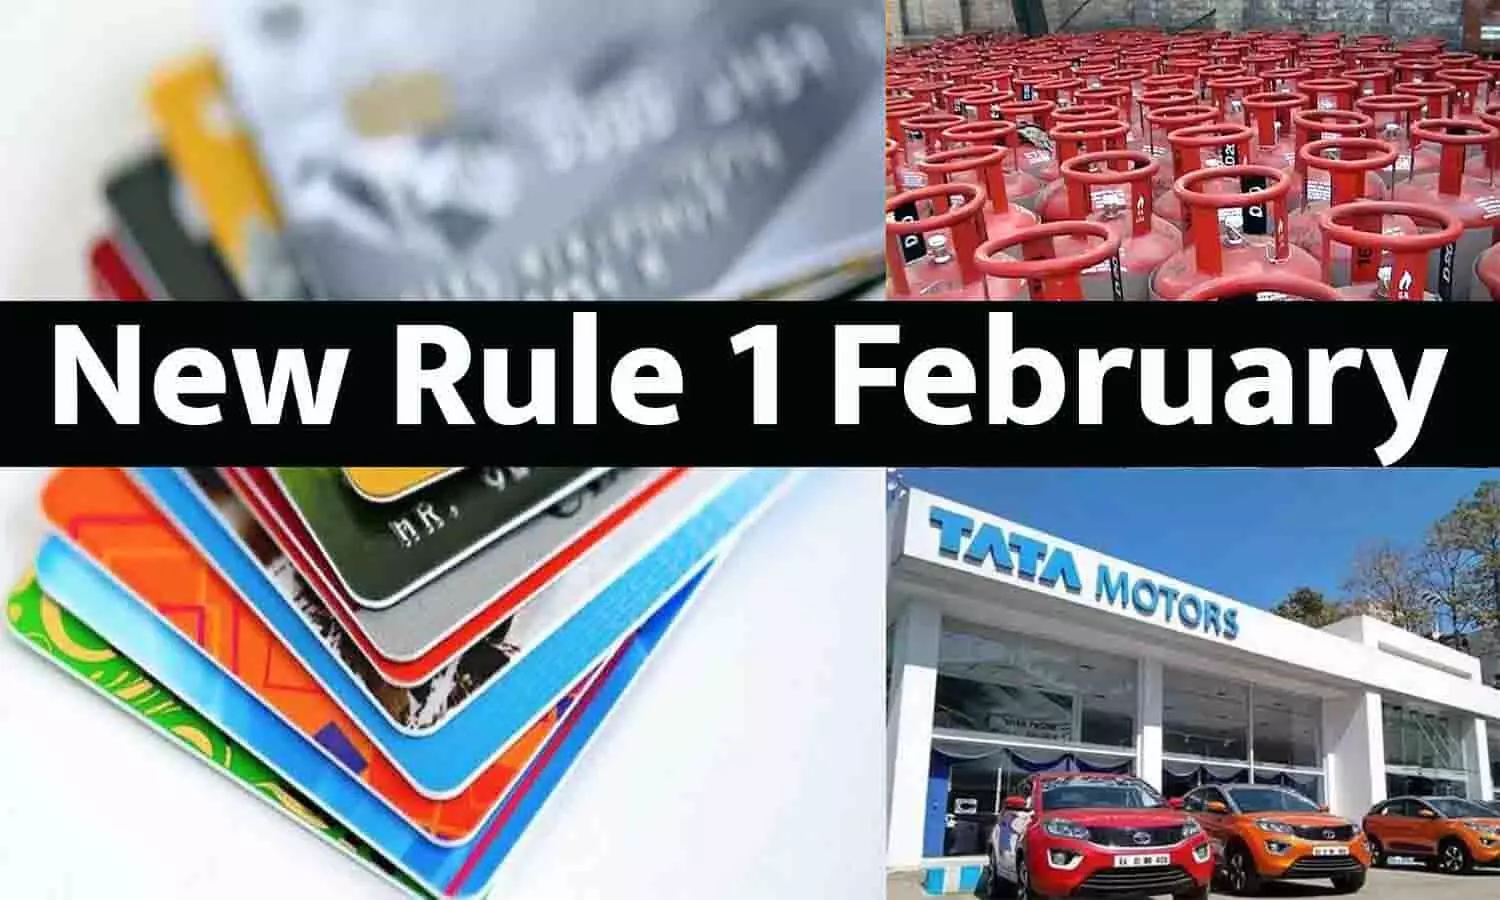 New Rule 1 February